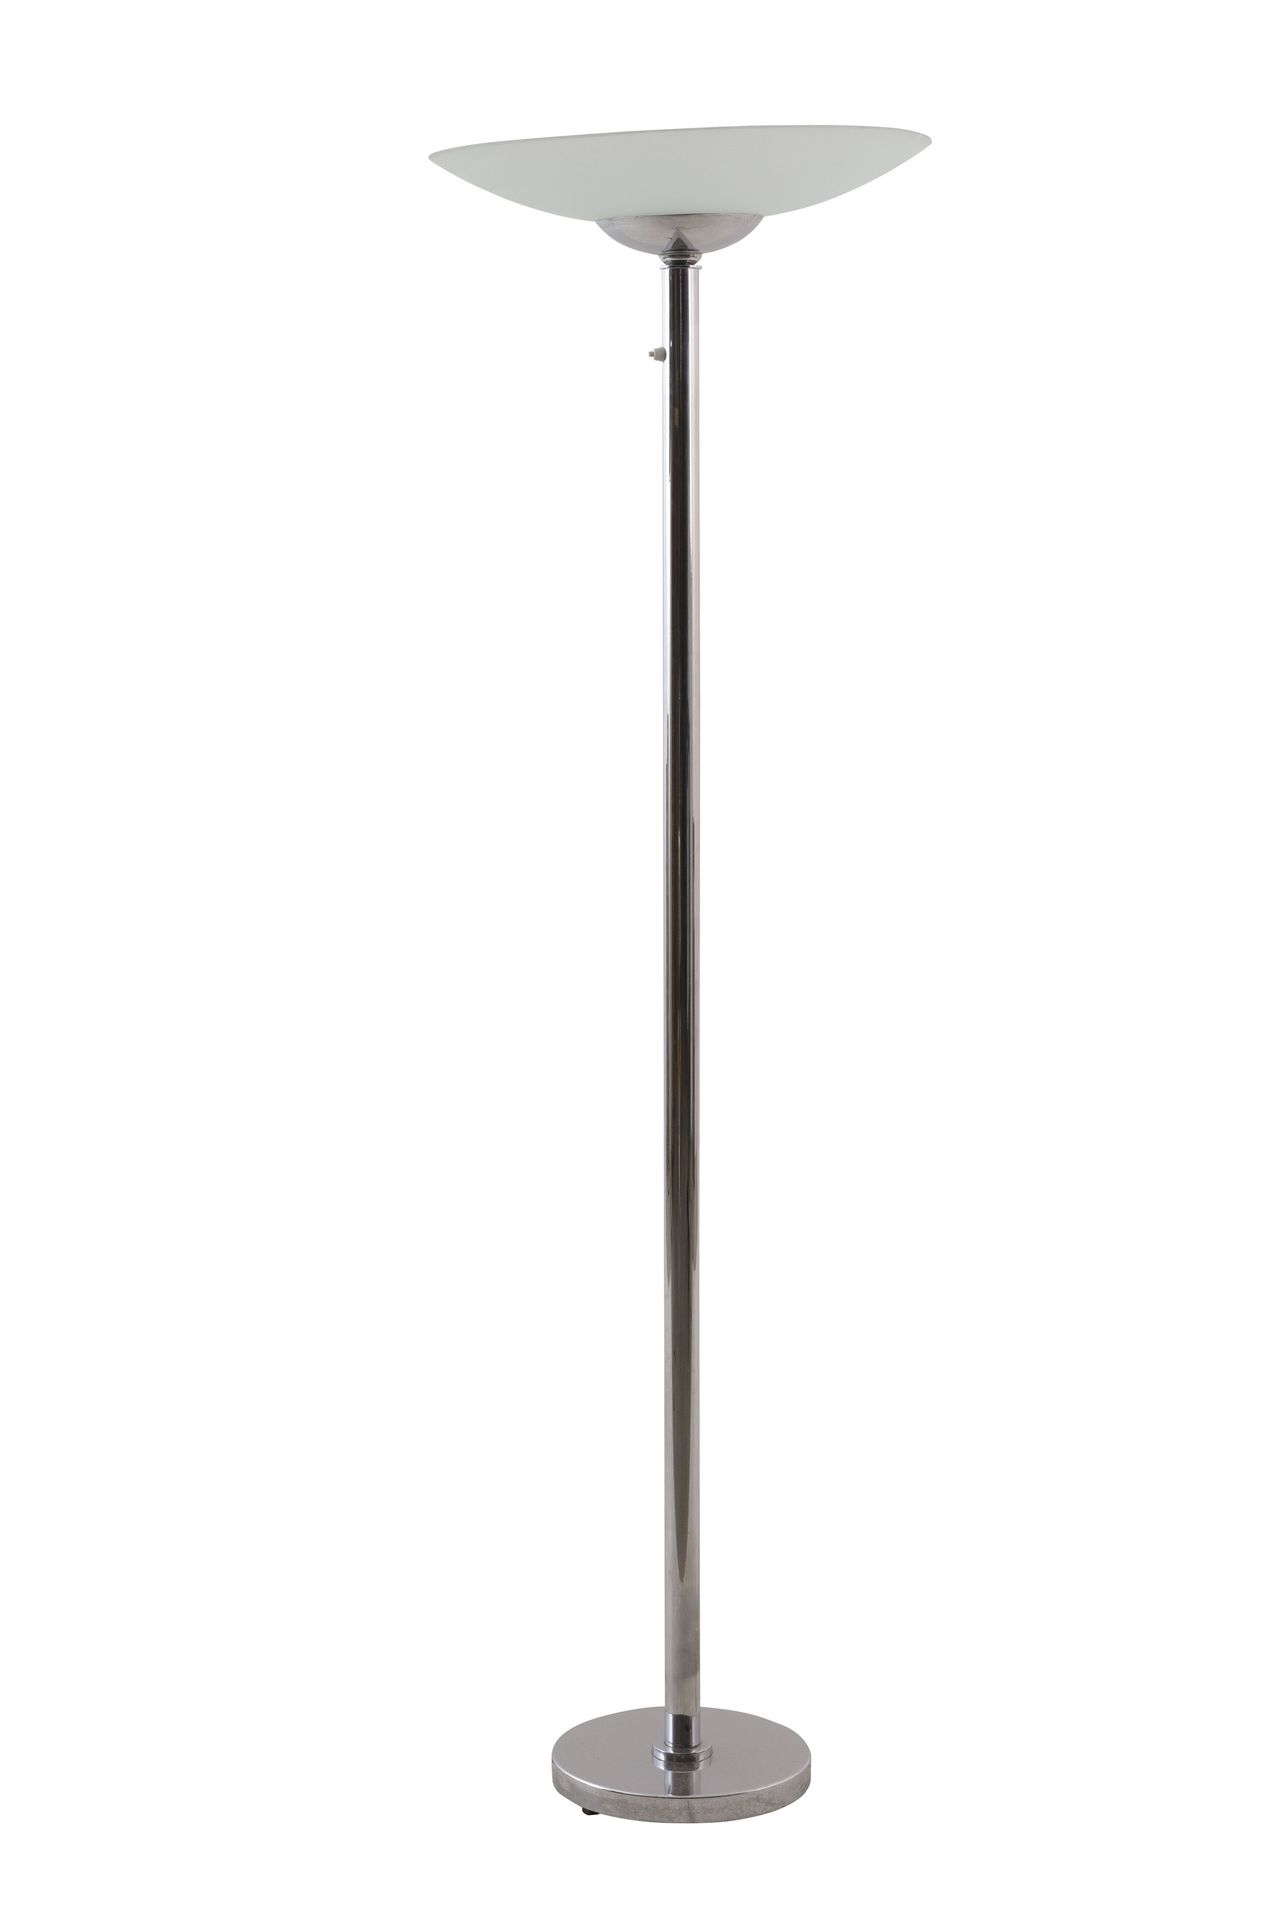 ANONIEM / ANONYME XX 落地灯。关于1990年。

高：180厘米，直径53厘米，镀铬金属和磨砂玻璃。